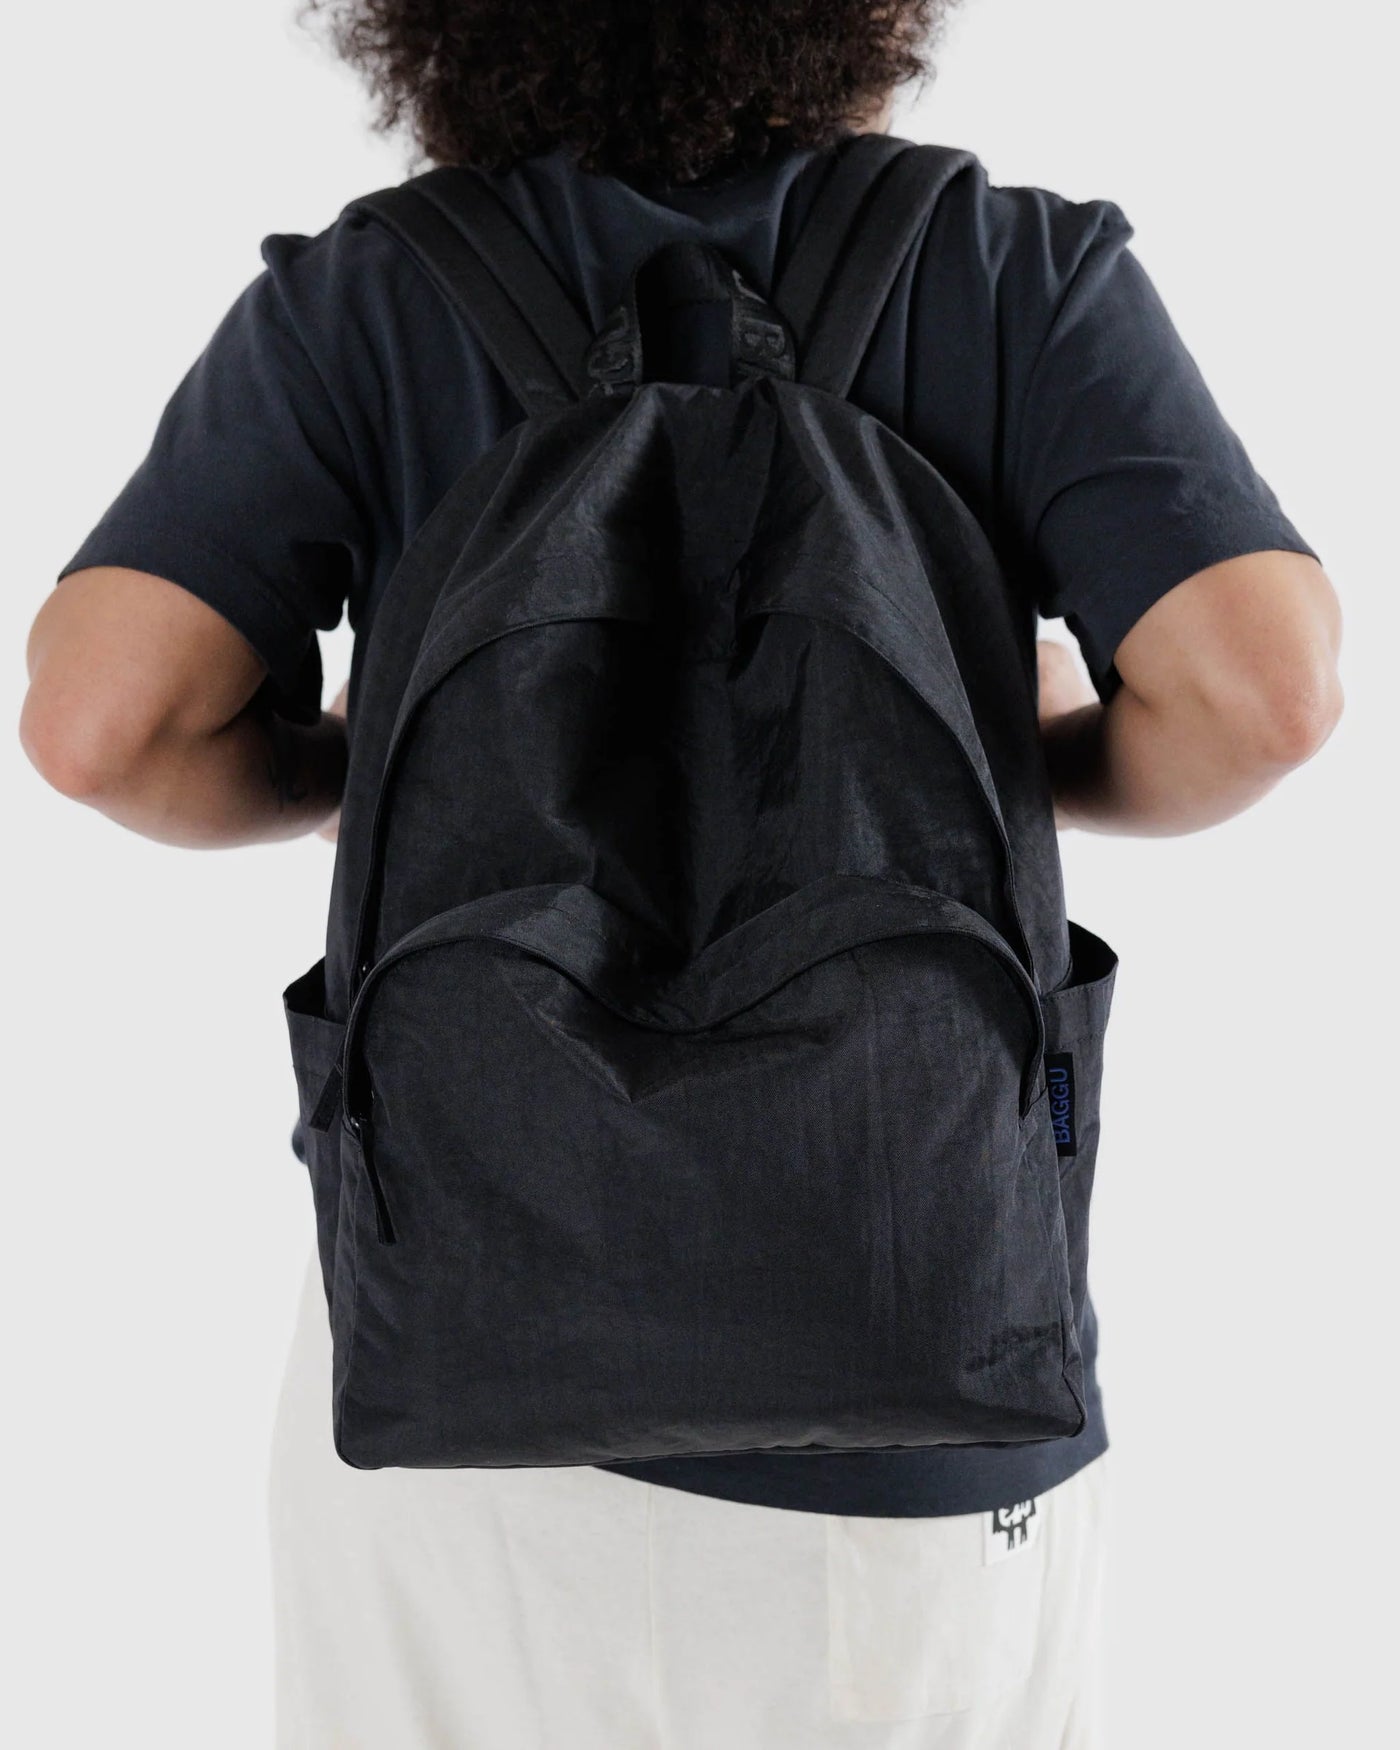 Baggu Large Nylon Backpack